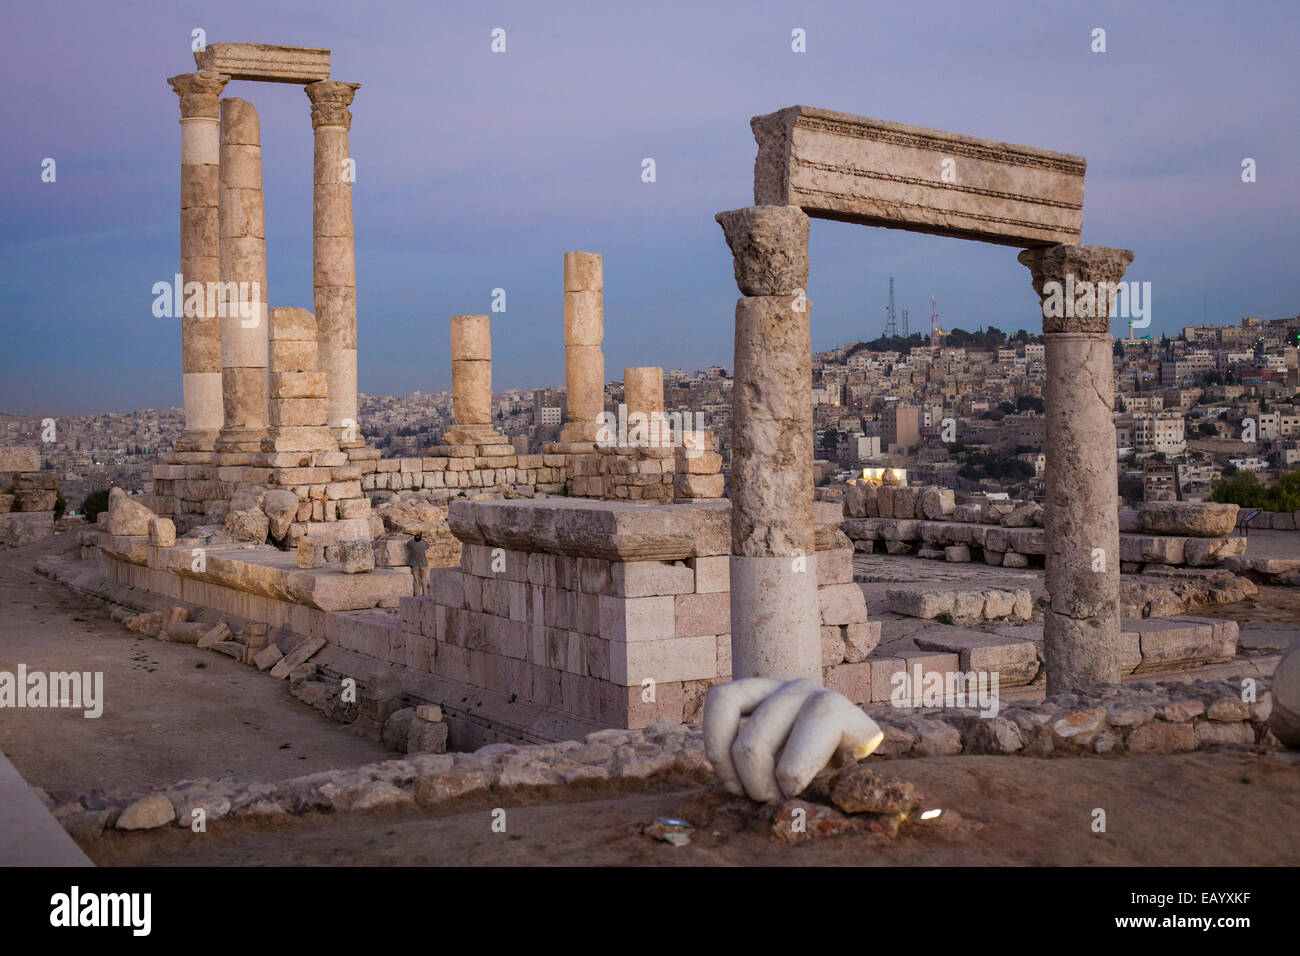 Ancient ruins in the citadel of Amman, Jordan at the Temple of Hercules Stock Photo